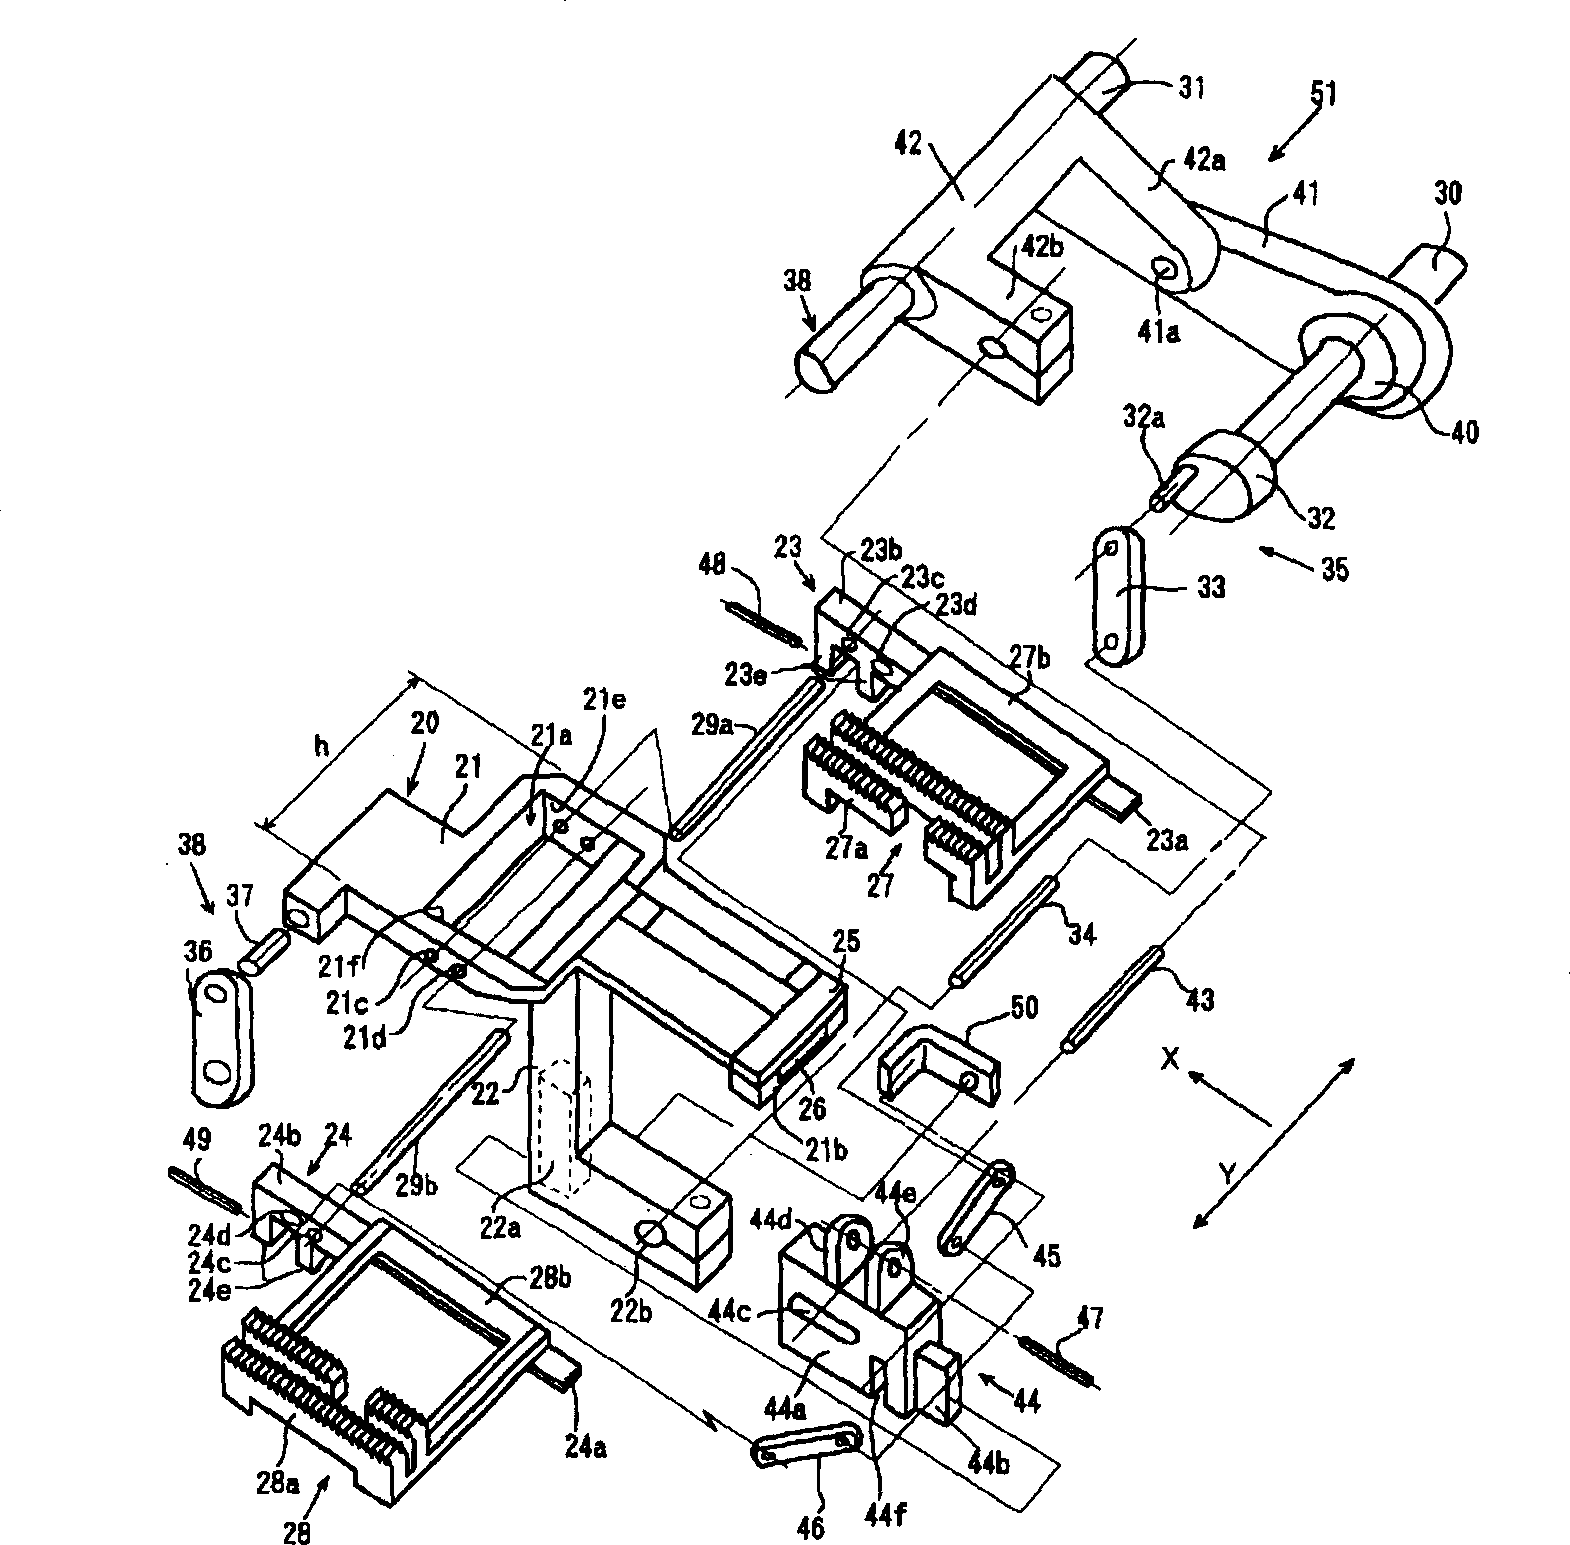 Cloth feeder of sewing machine